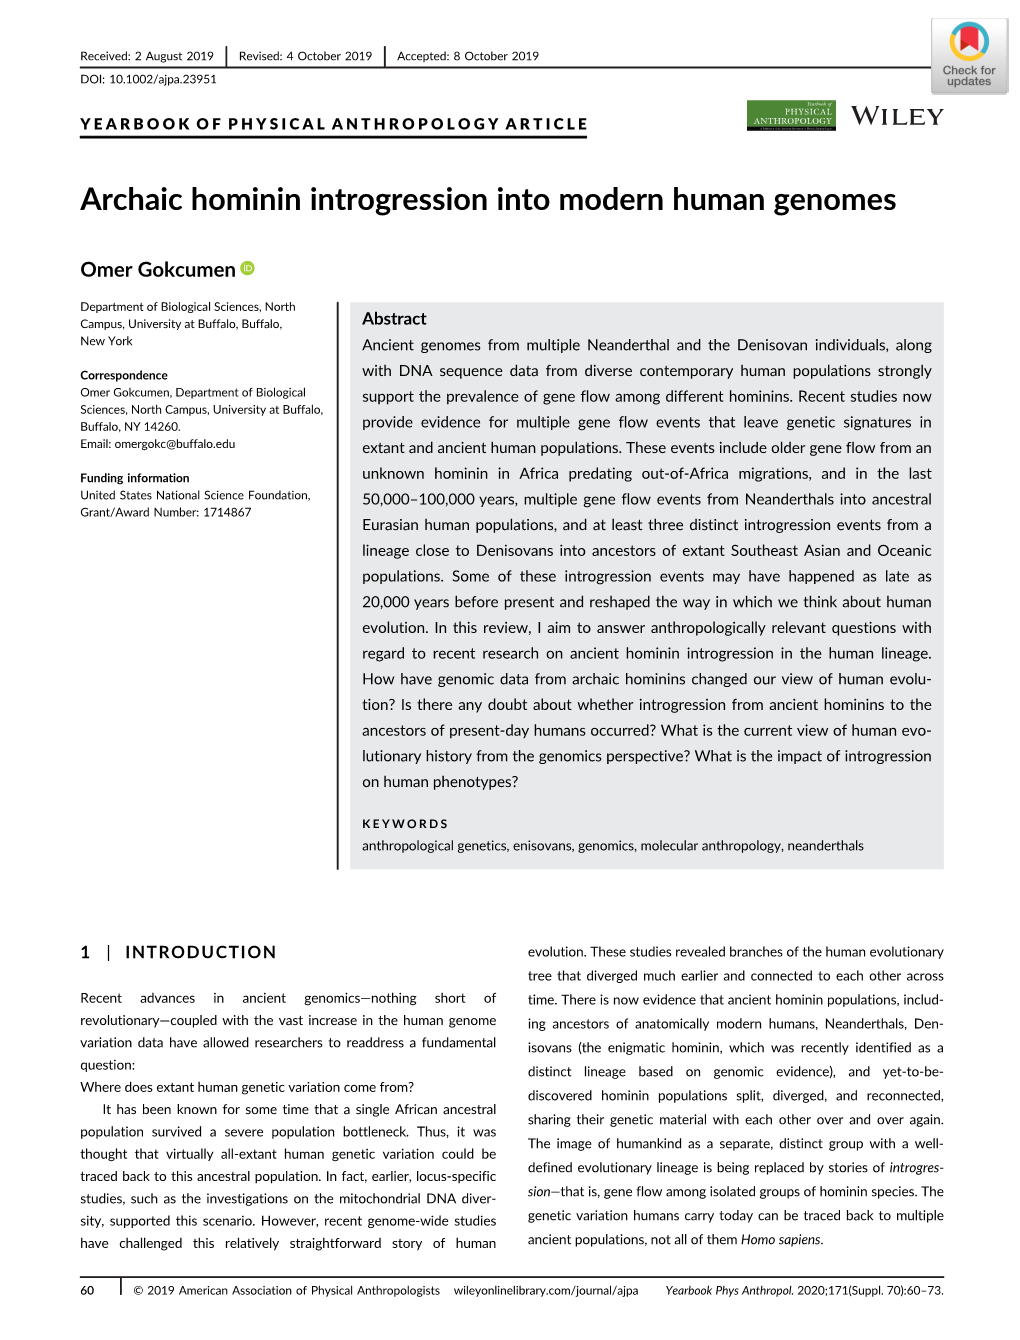 Archaic Hominin Introgression Into Modern Human Genomes